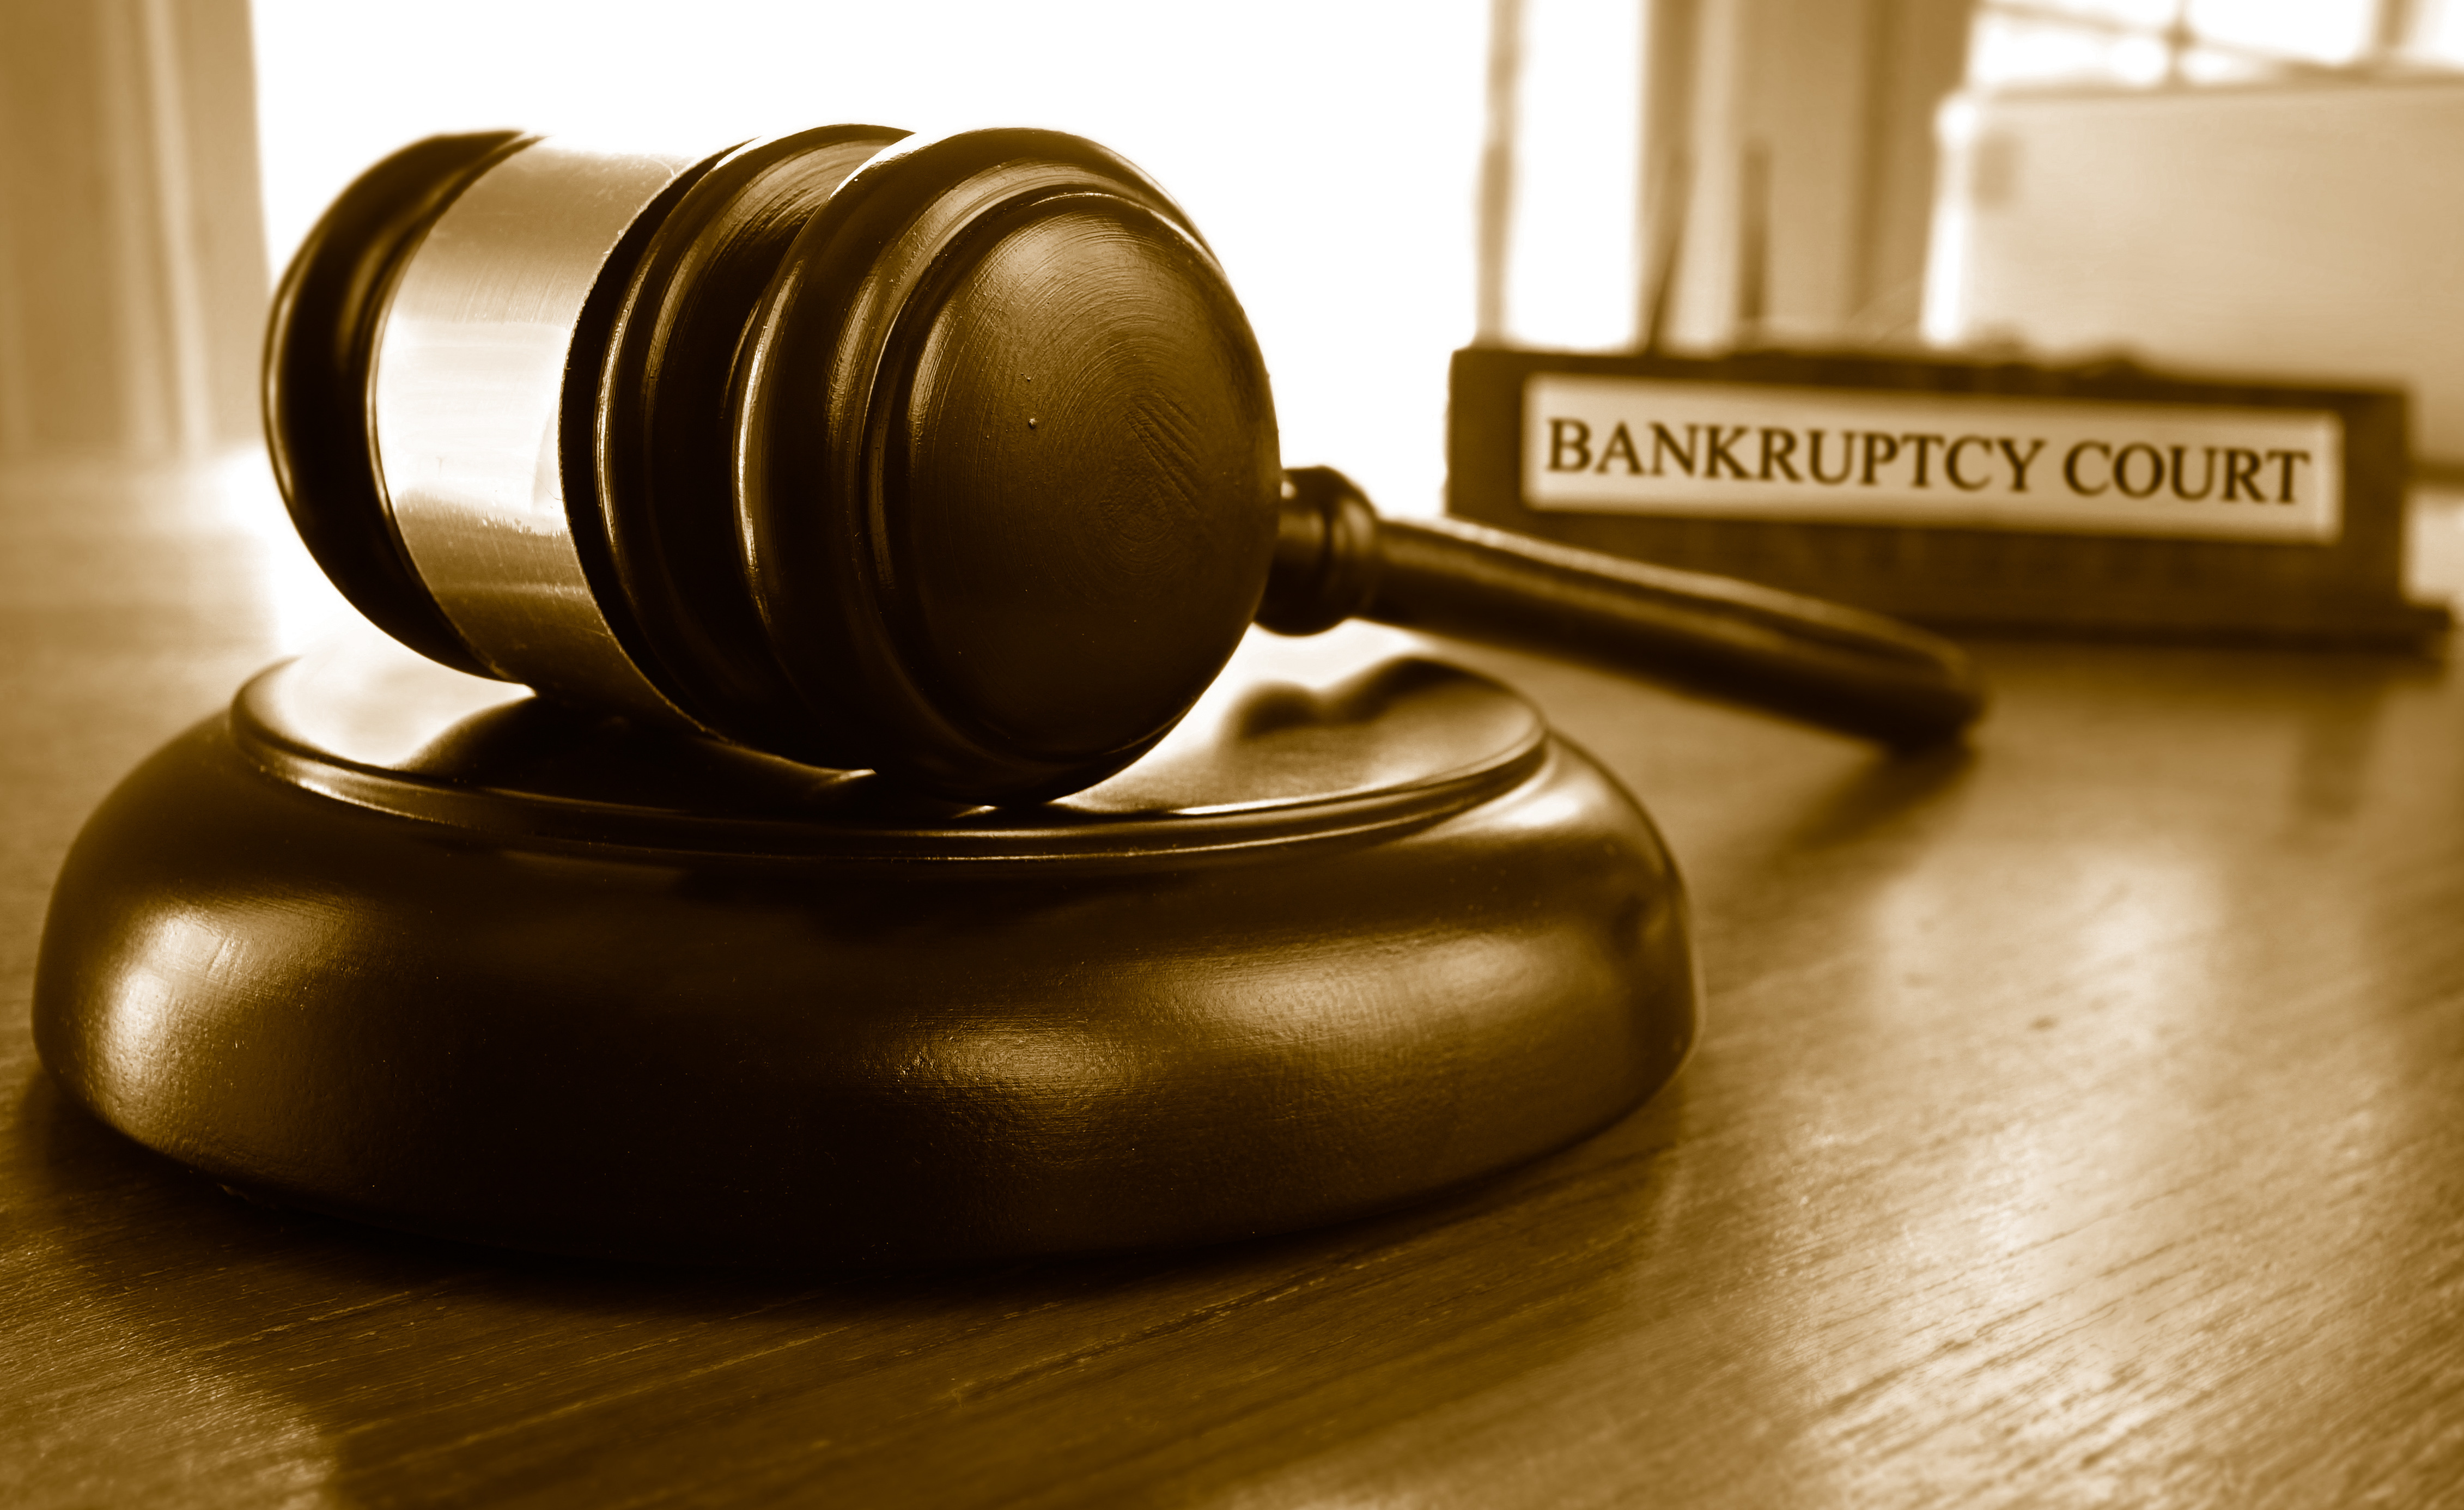 Bankruptcy court gavel